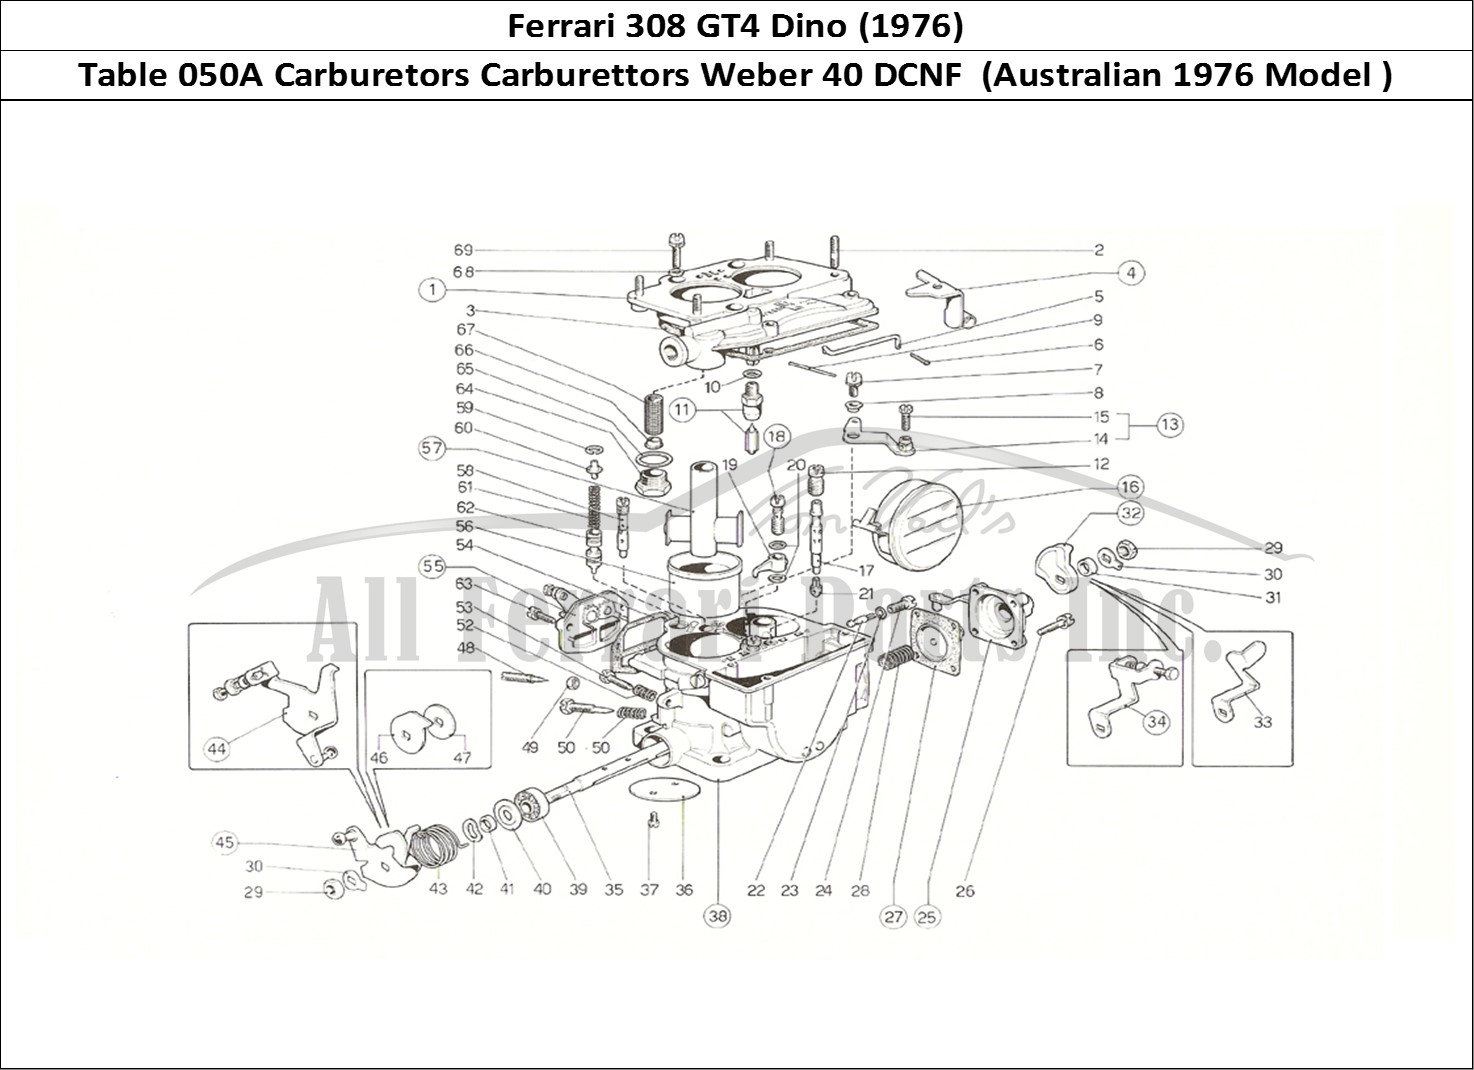 Ferrari Parts Ferrari 308 GT4 Dino (1976) Page 050 Weber 40 DCNF carbs (Aust